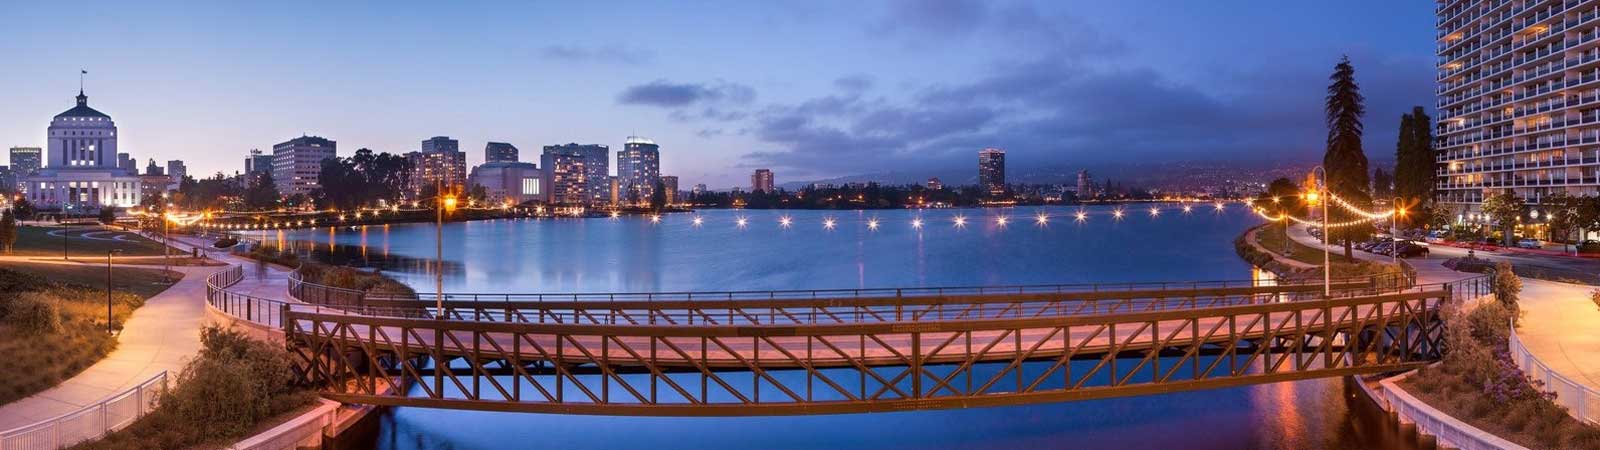 Oakland Fund for Public Innovation-City of Oakland